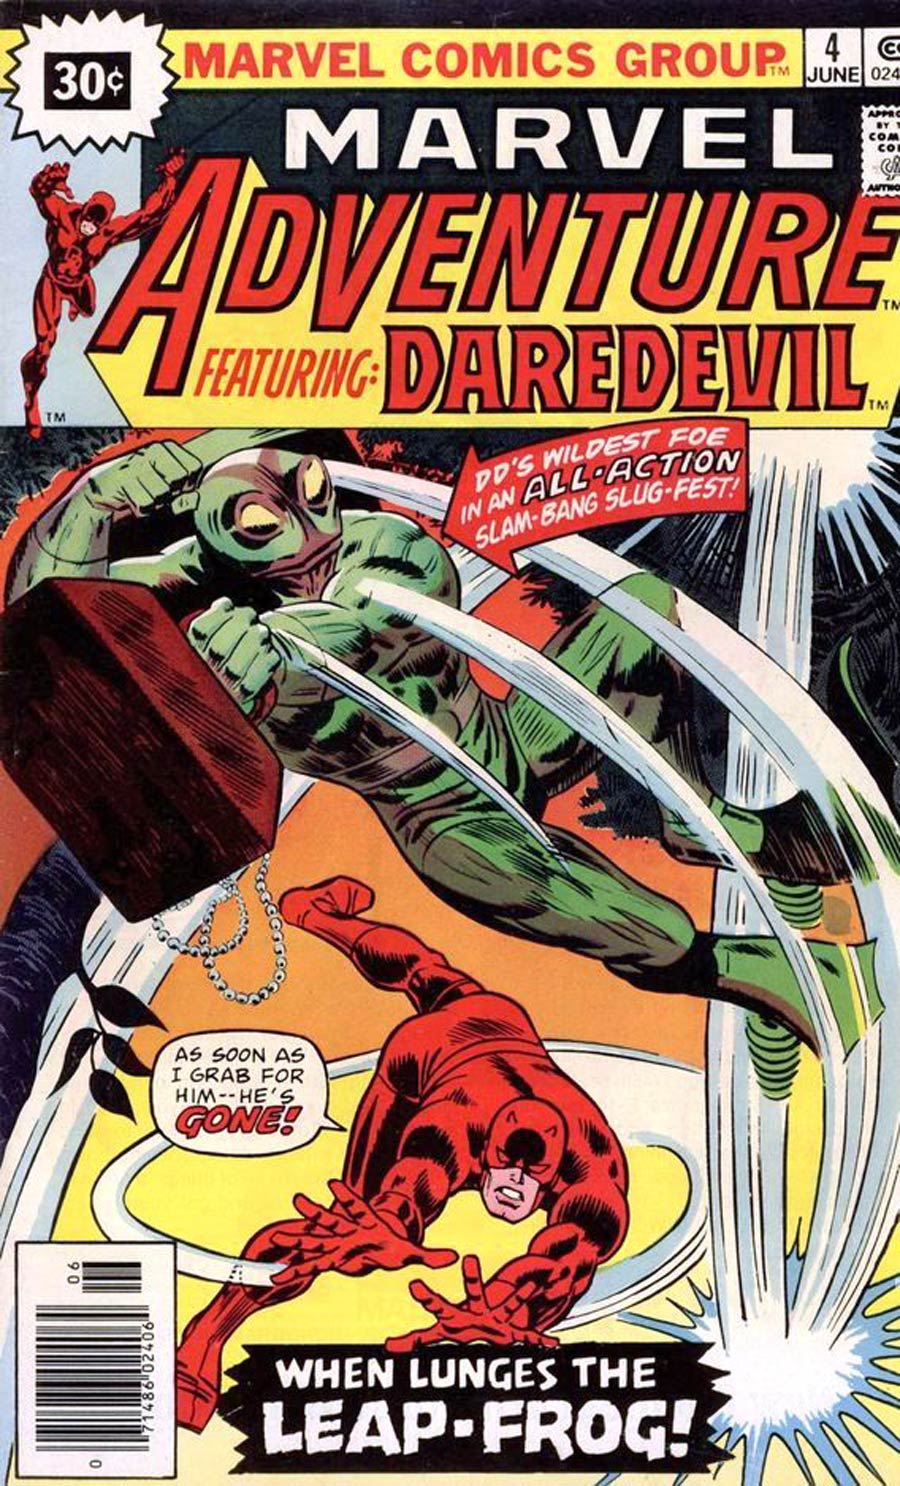 Marvel Adventure Featuring Daredevil #4 Cover B 30 Cent Variant